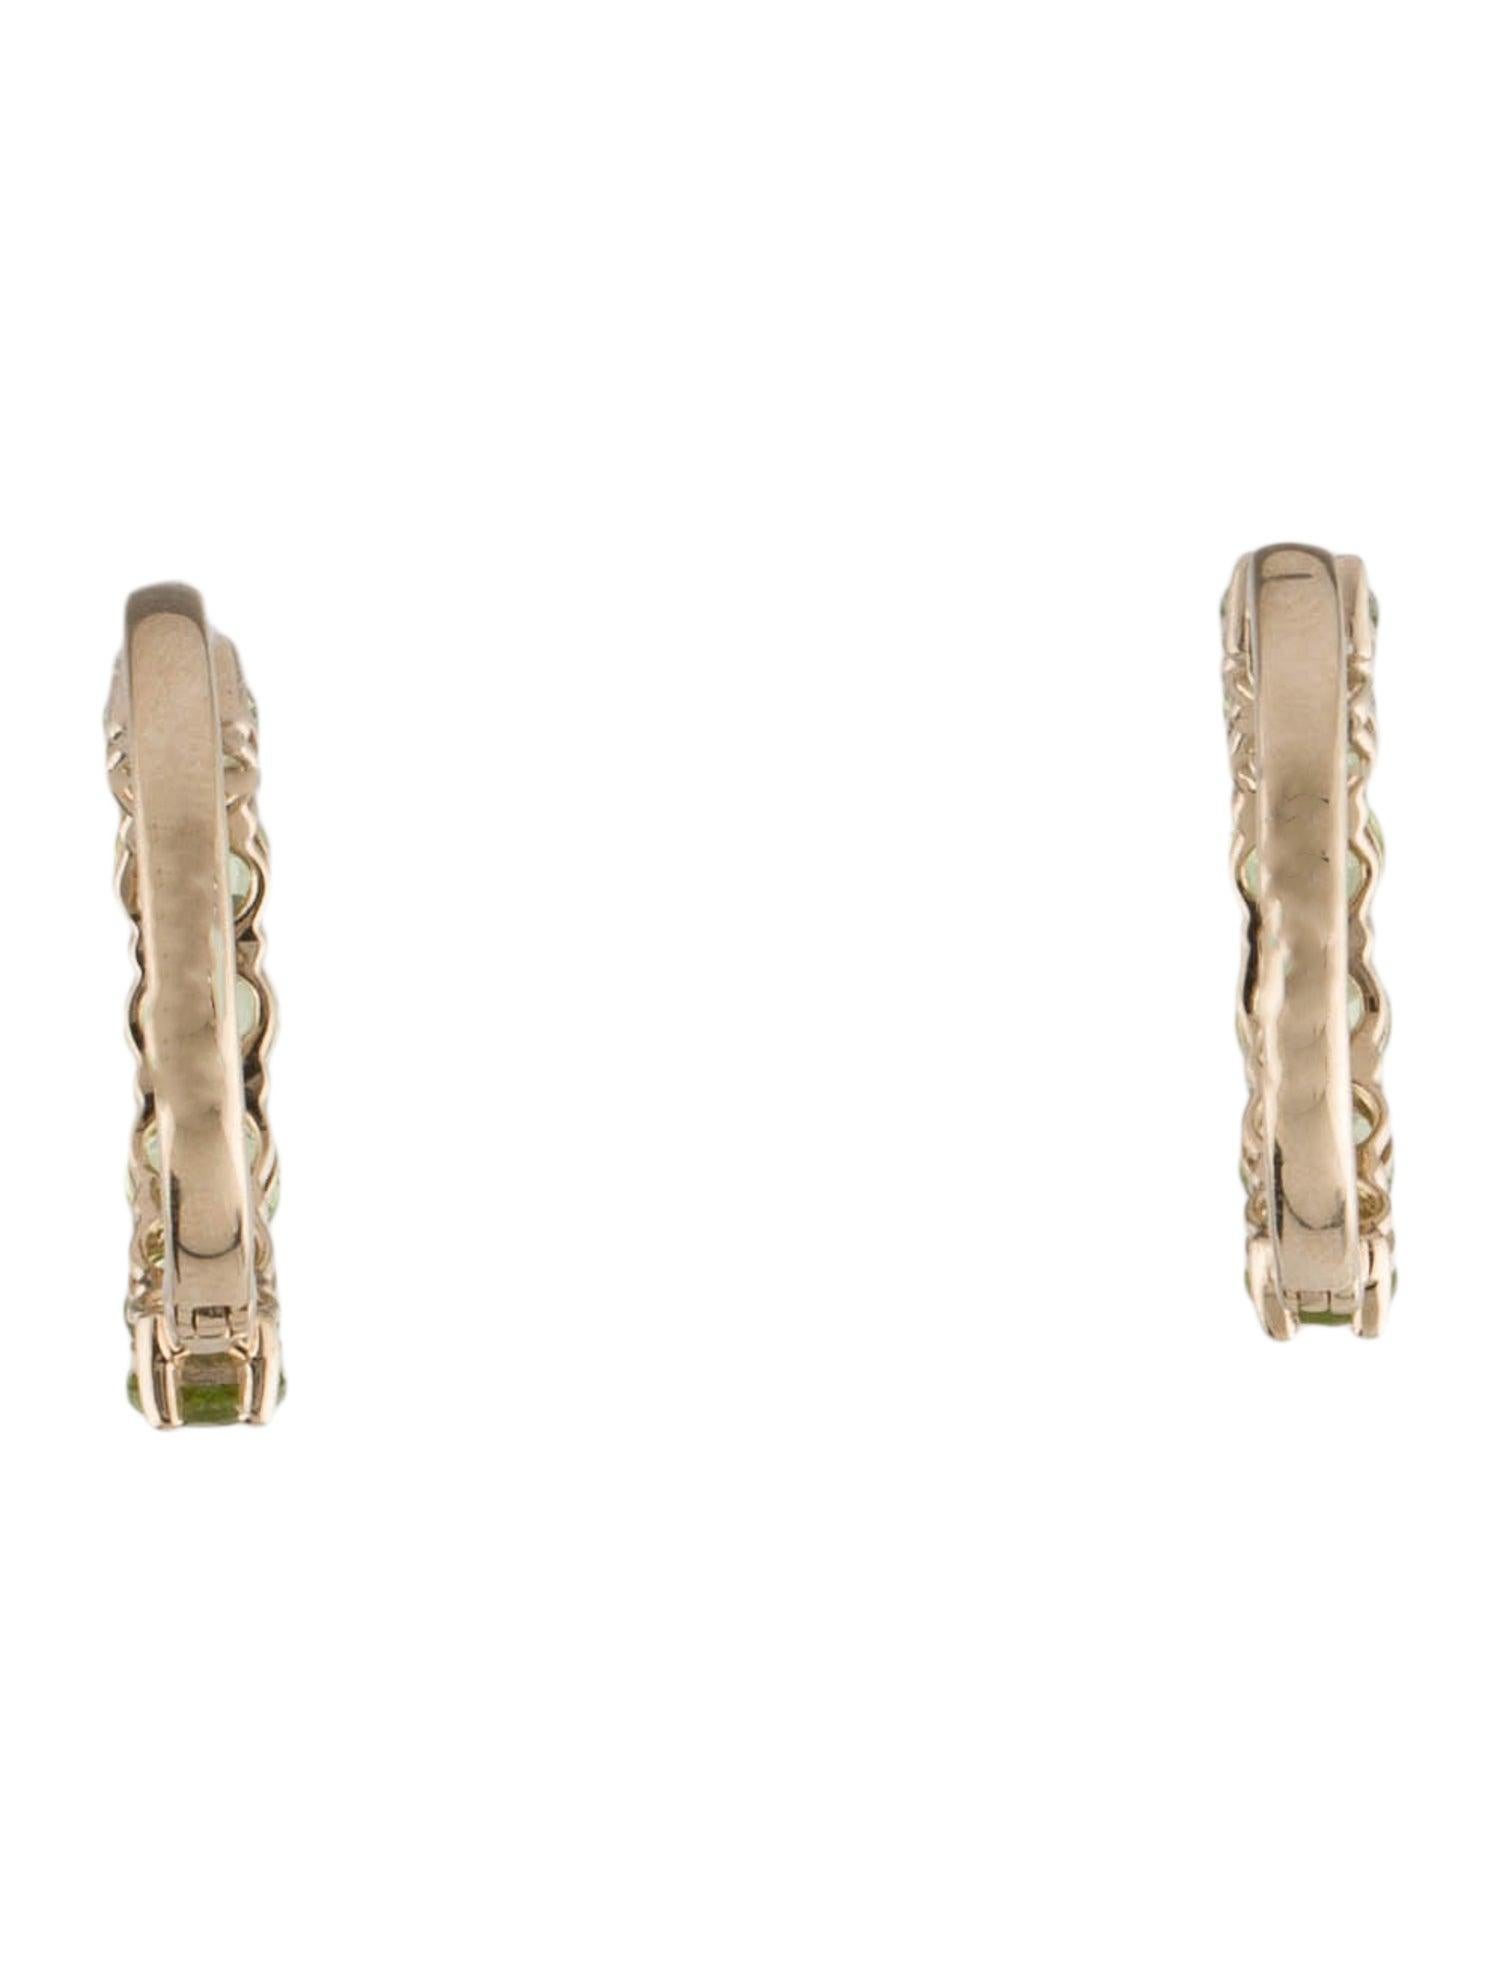 Brilliant Cut 14K Peridot Huggie Earrings - 3.75ctw, Elegant Gemstone Jewelry, Timeless Style For Sale